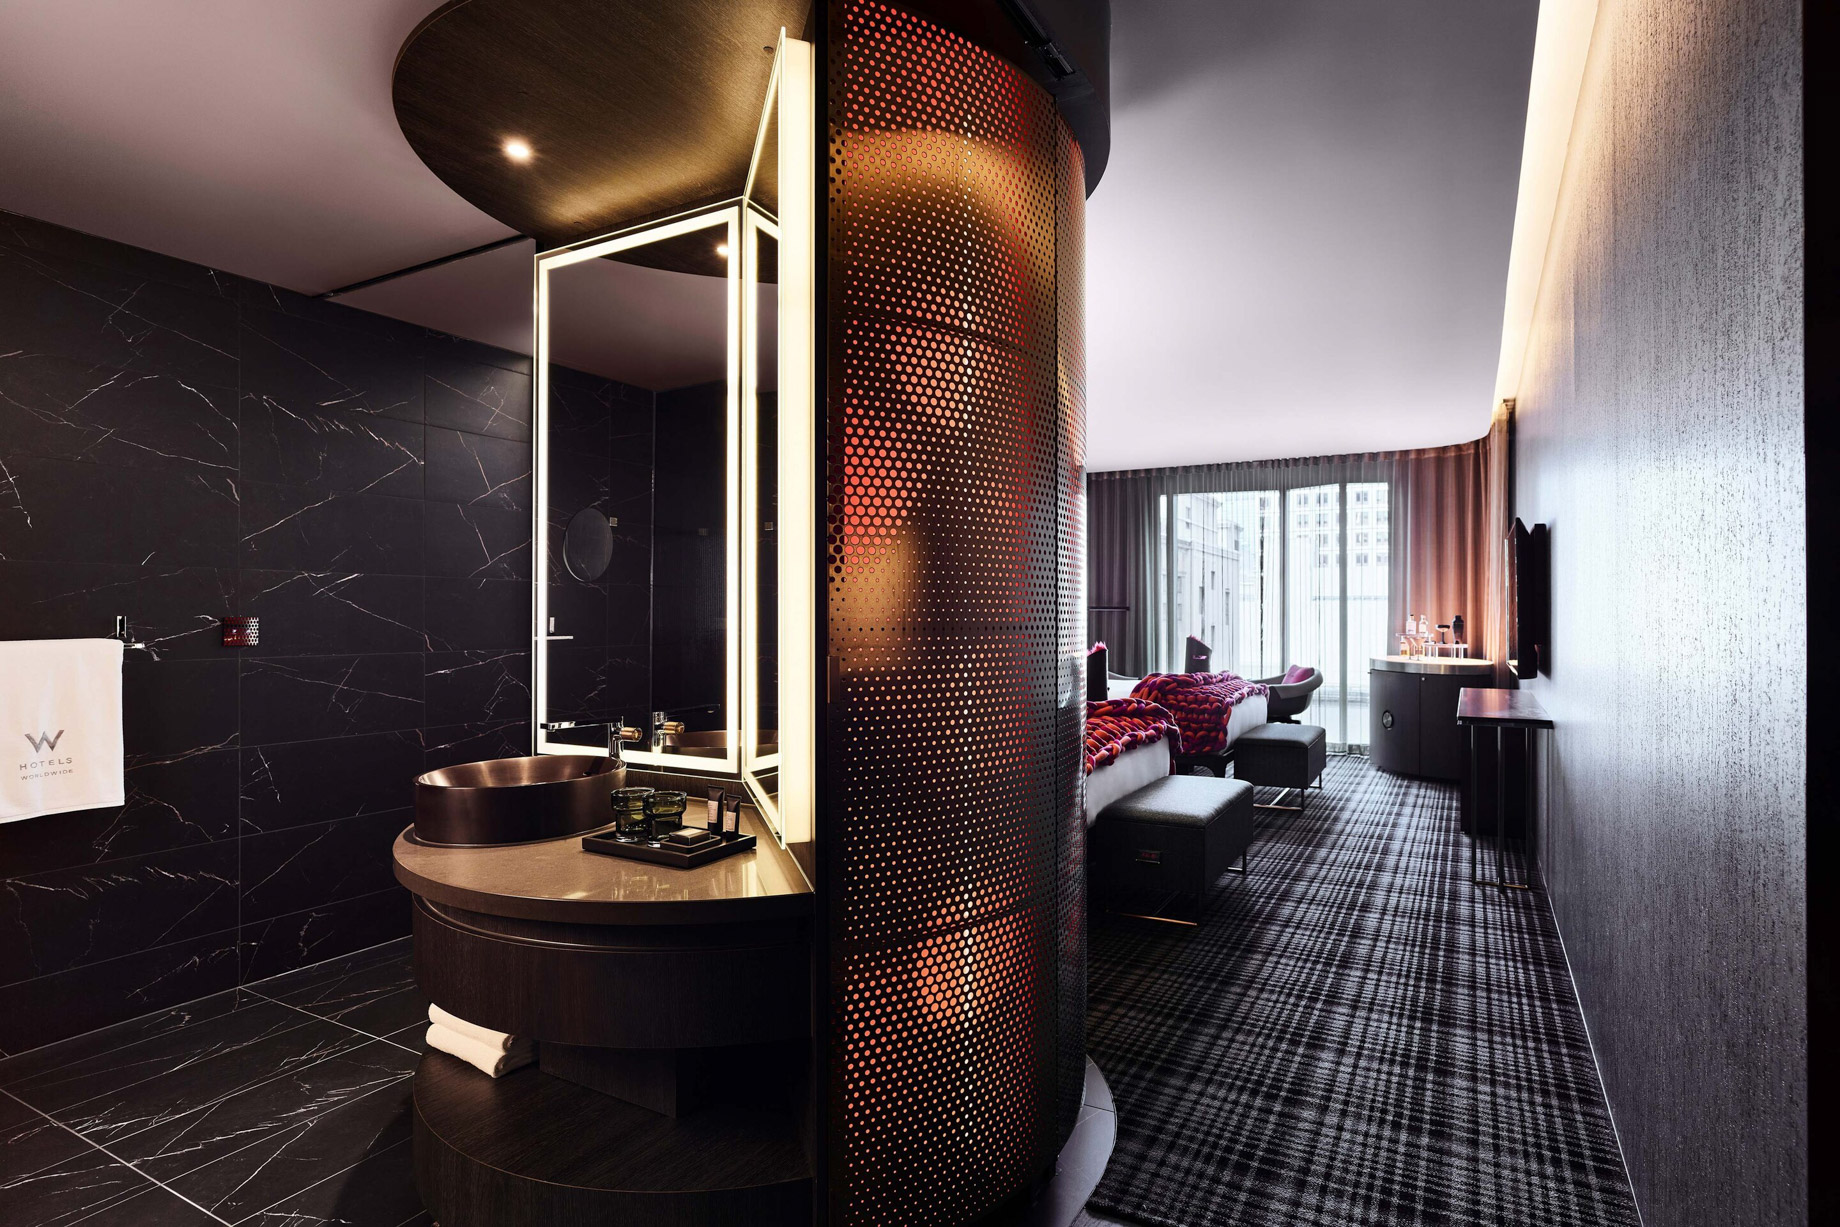 W Melbourne Hotel – Melbourne, Australia – Fabulous Double Bathroom